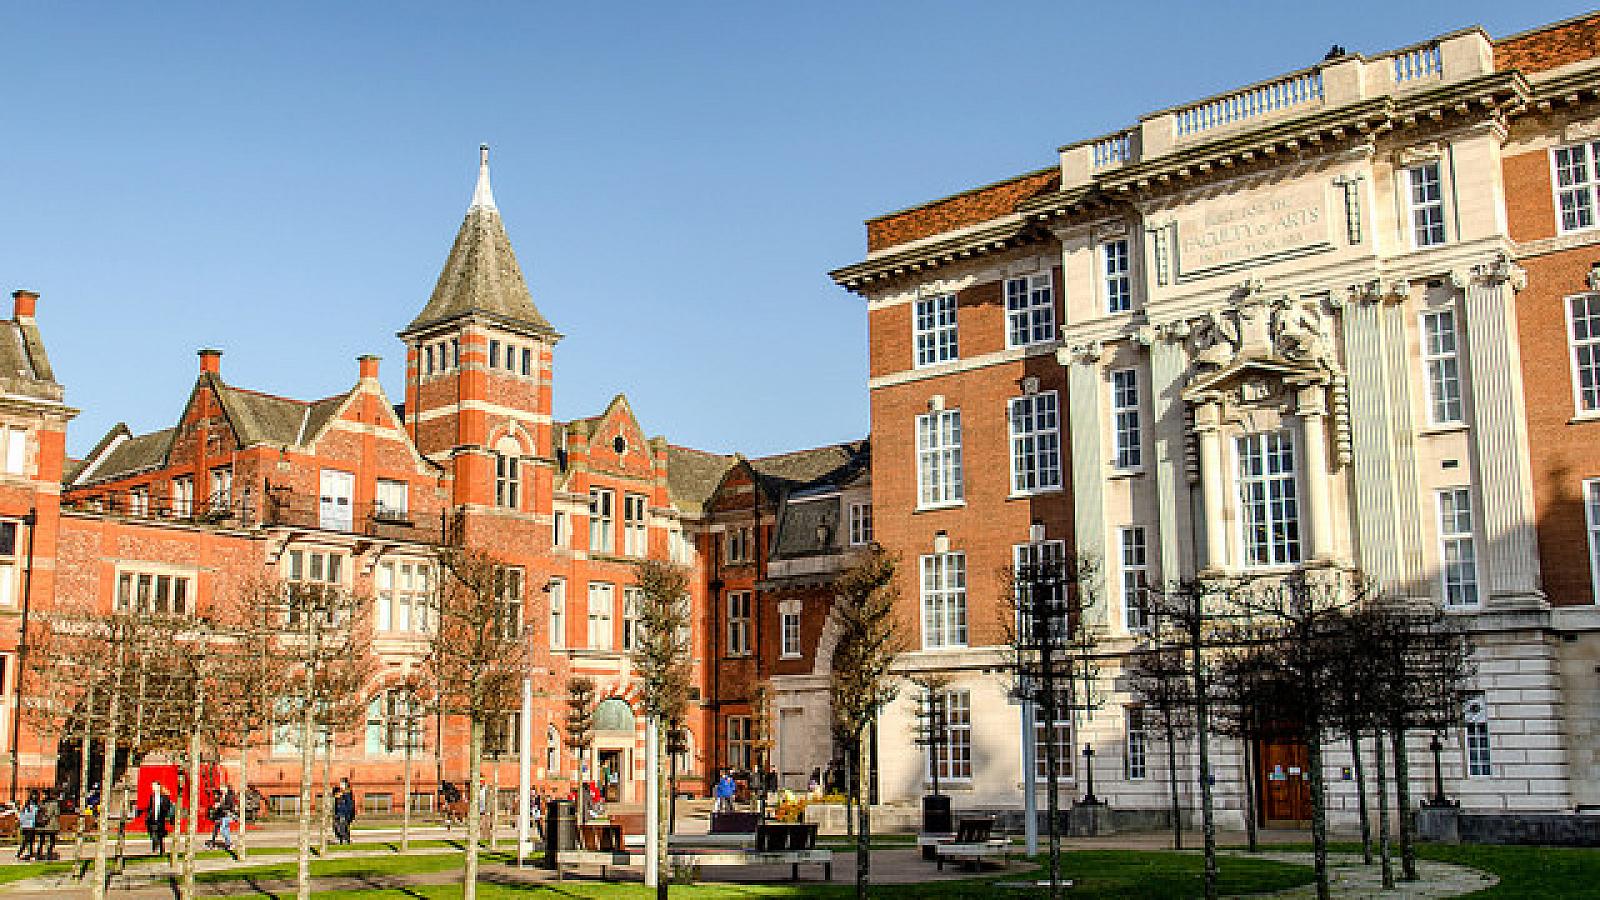 University of Liverpool 